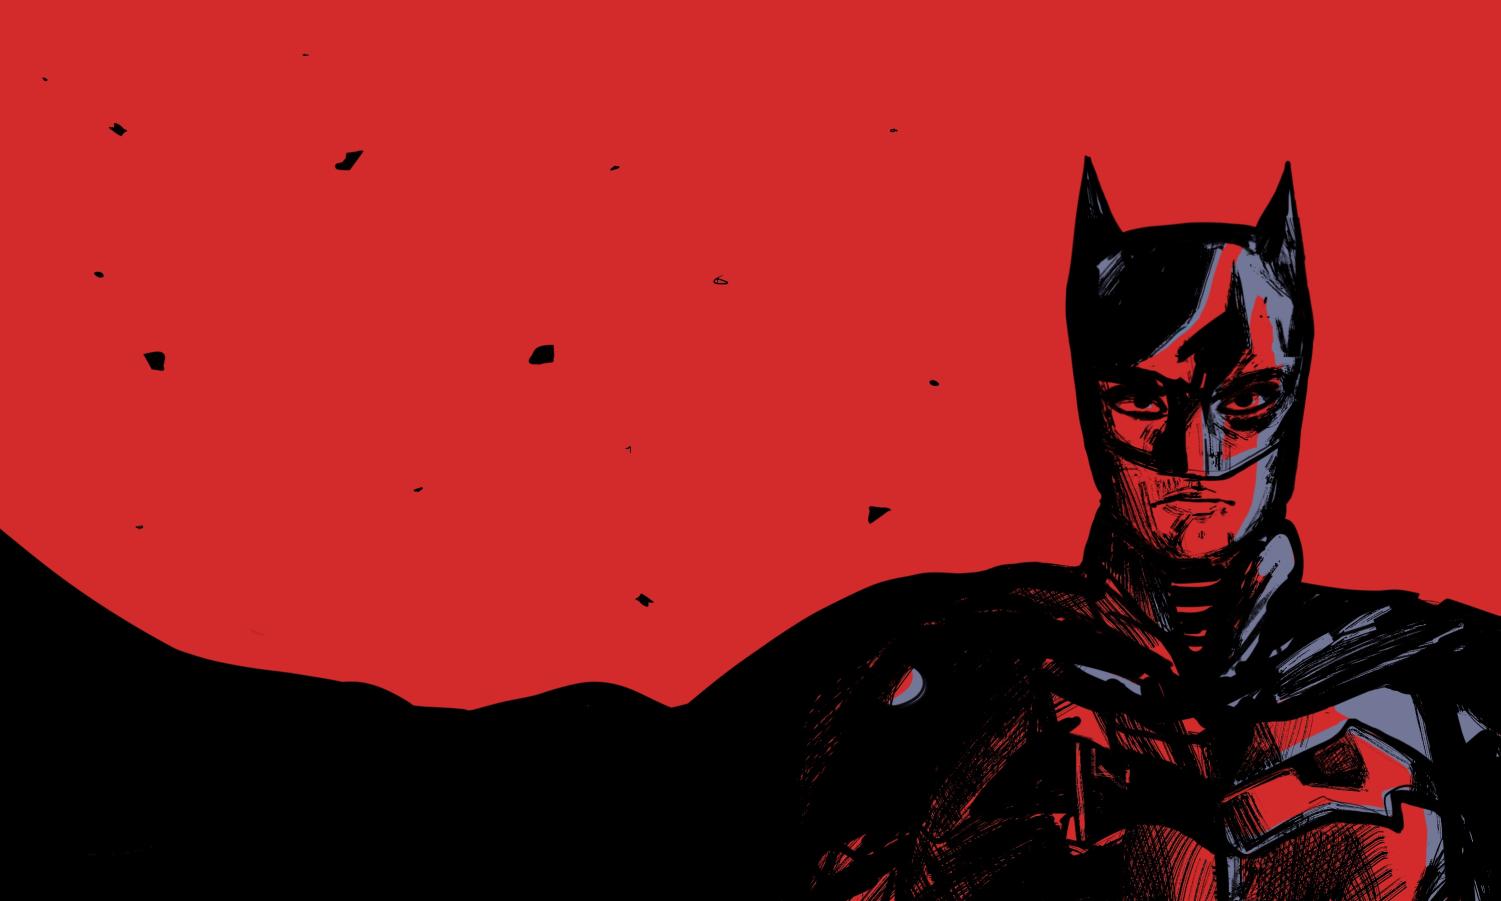 The Batman” finds success as dark detective story